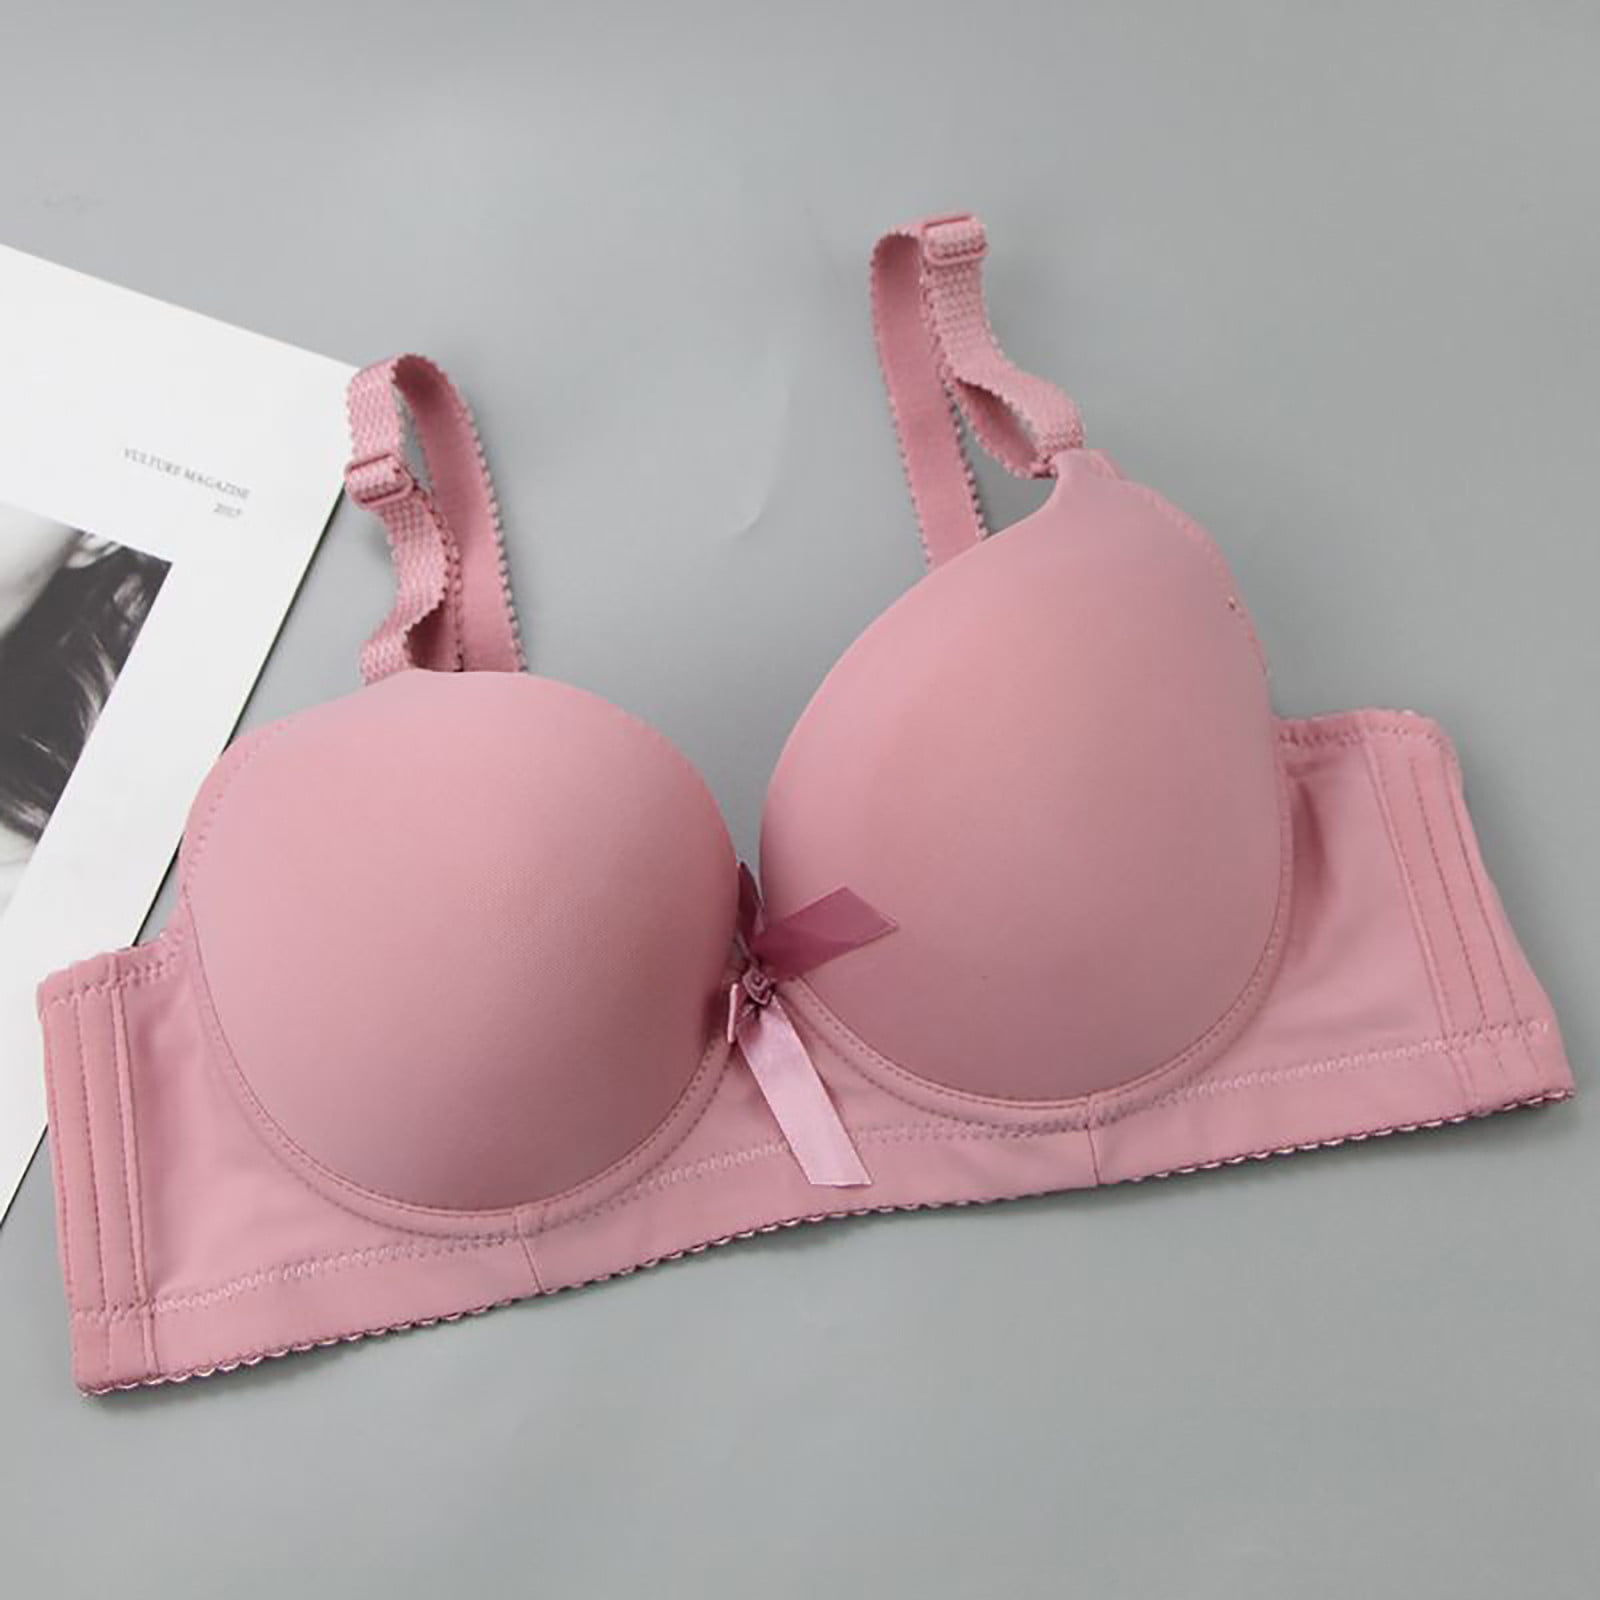 Buy Geyoga Women Hosiery Non Padded Pink Bra, Lingerie & Innerwear